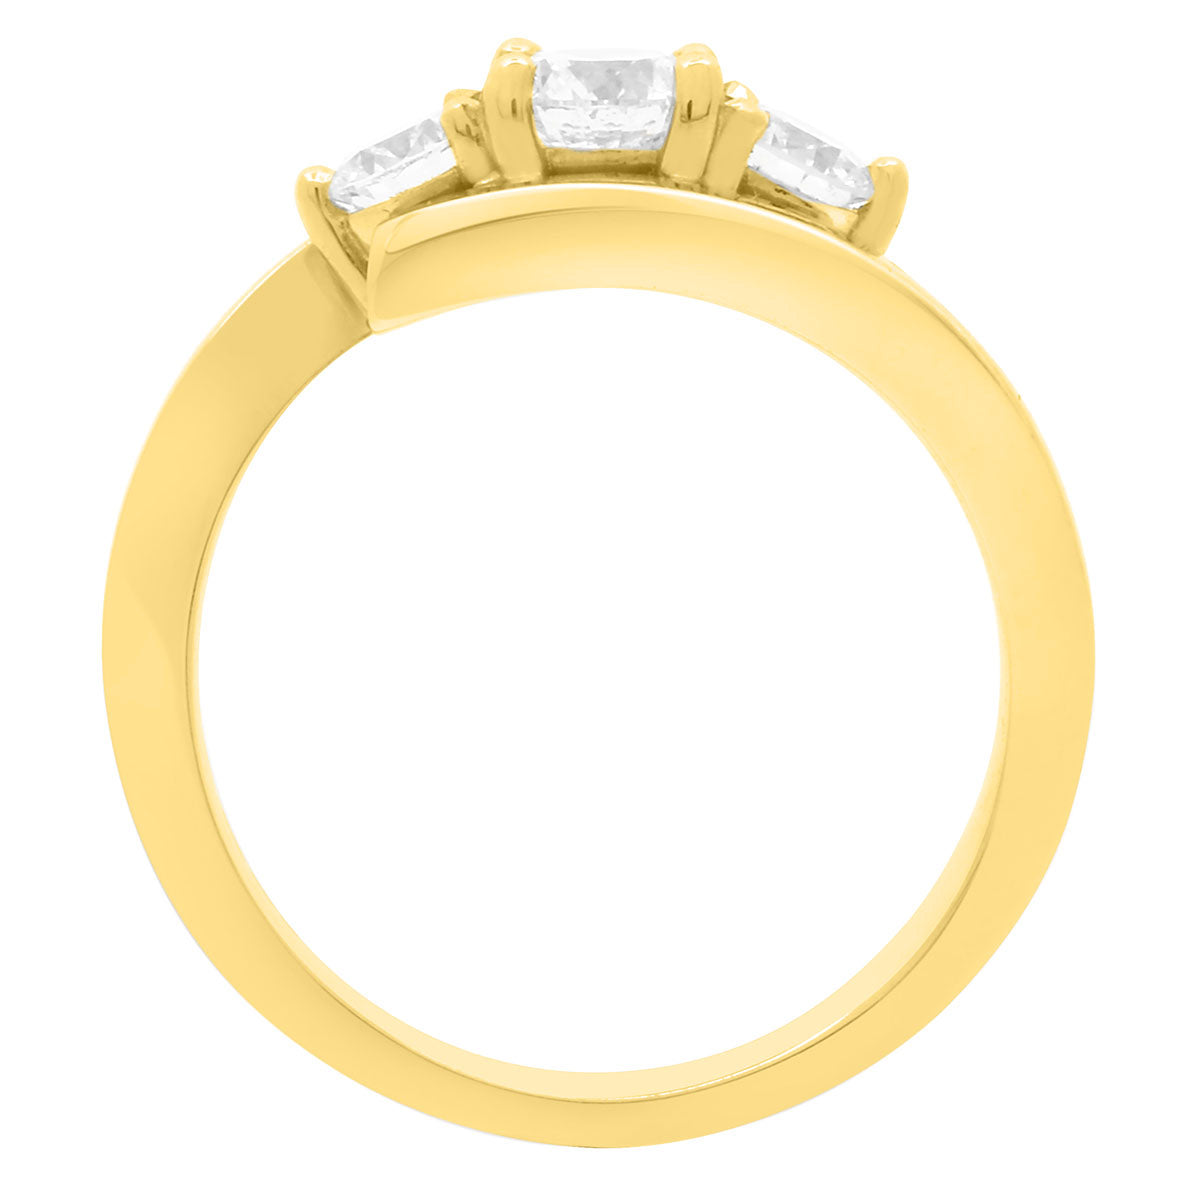 Contemporary Style Diamond Ring – ‘Carla’